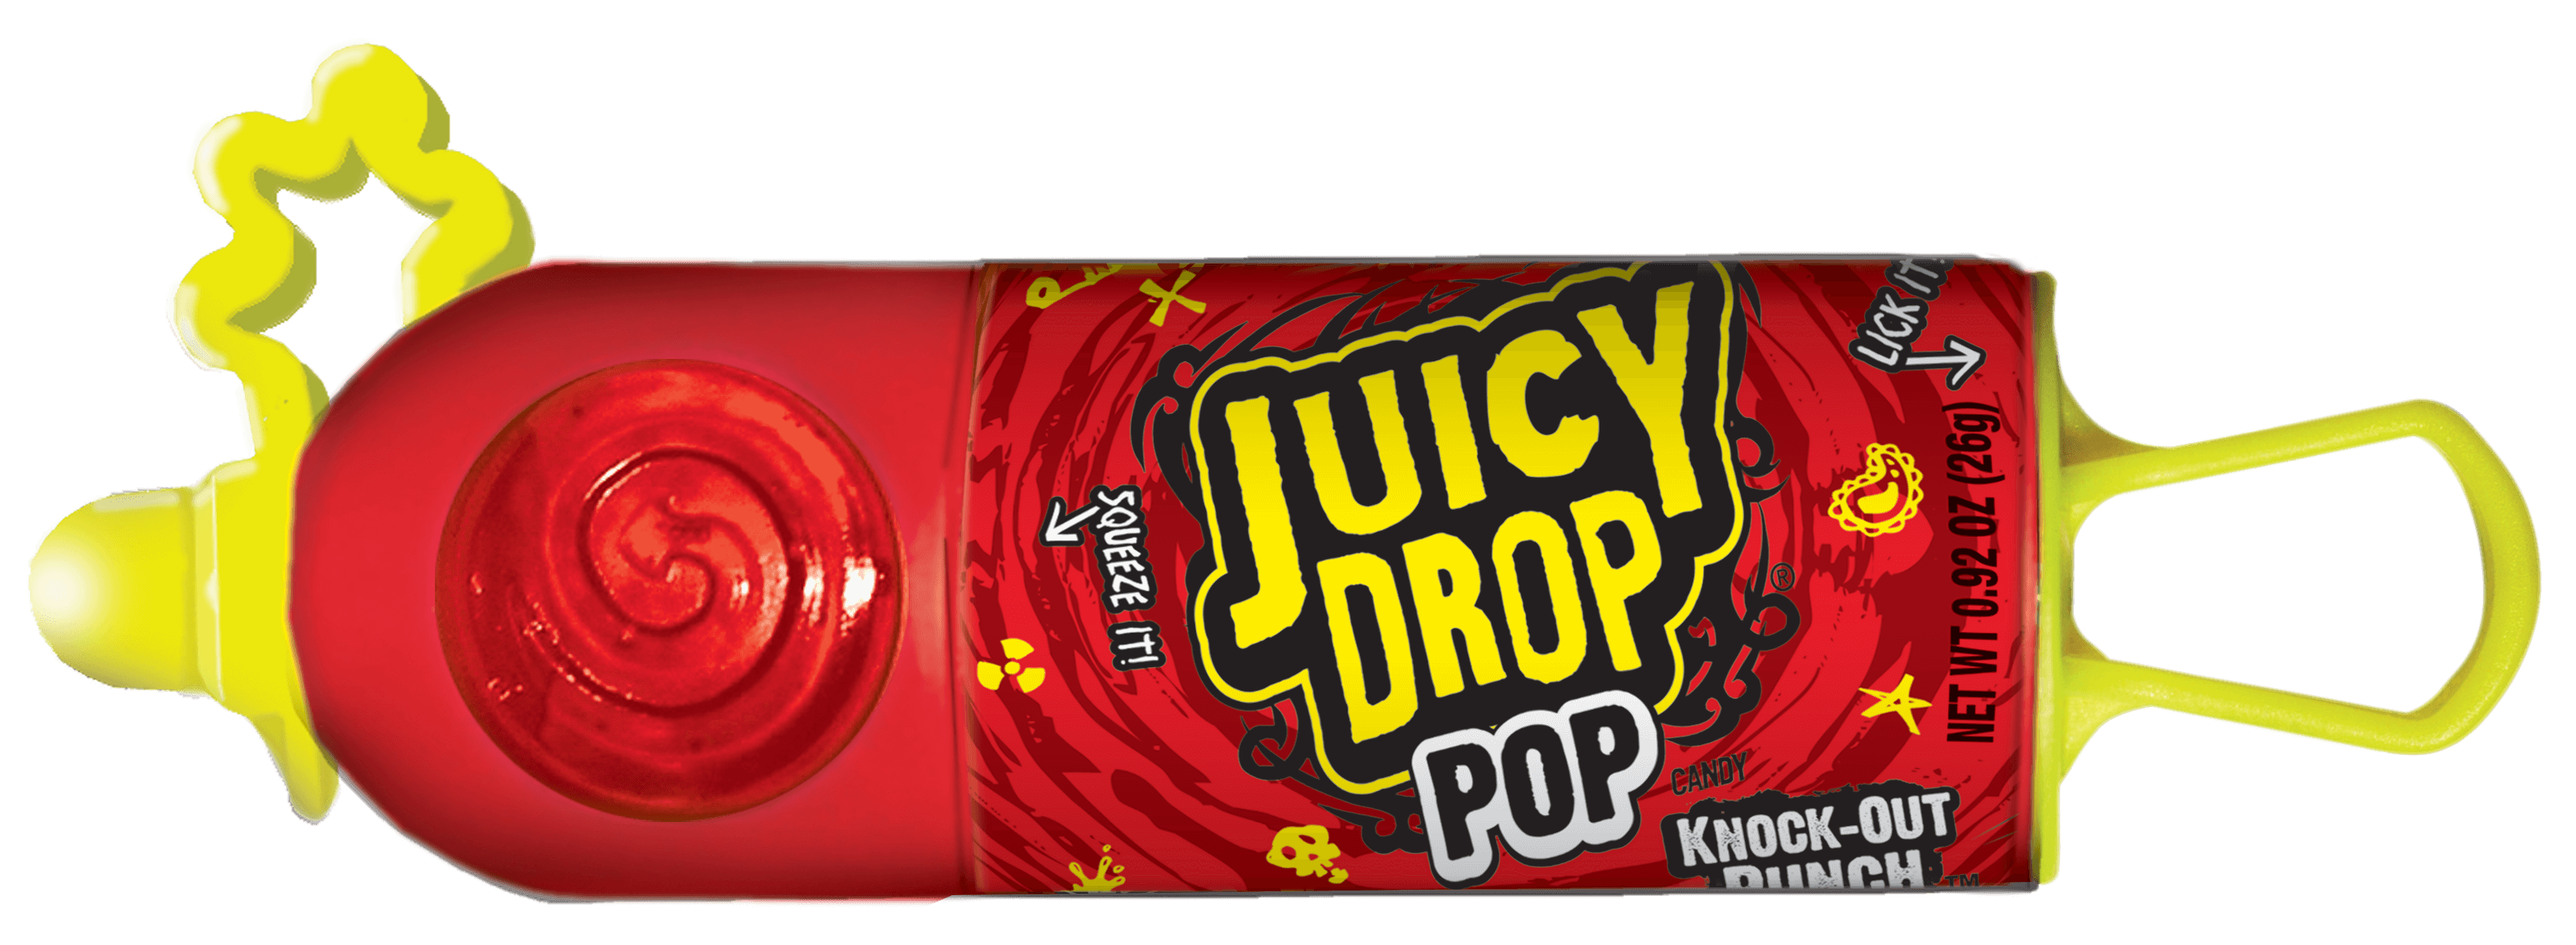 Triple Push Pop 34g - Nick & Joe Candy Shop